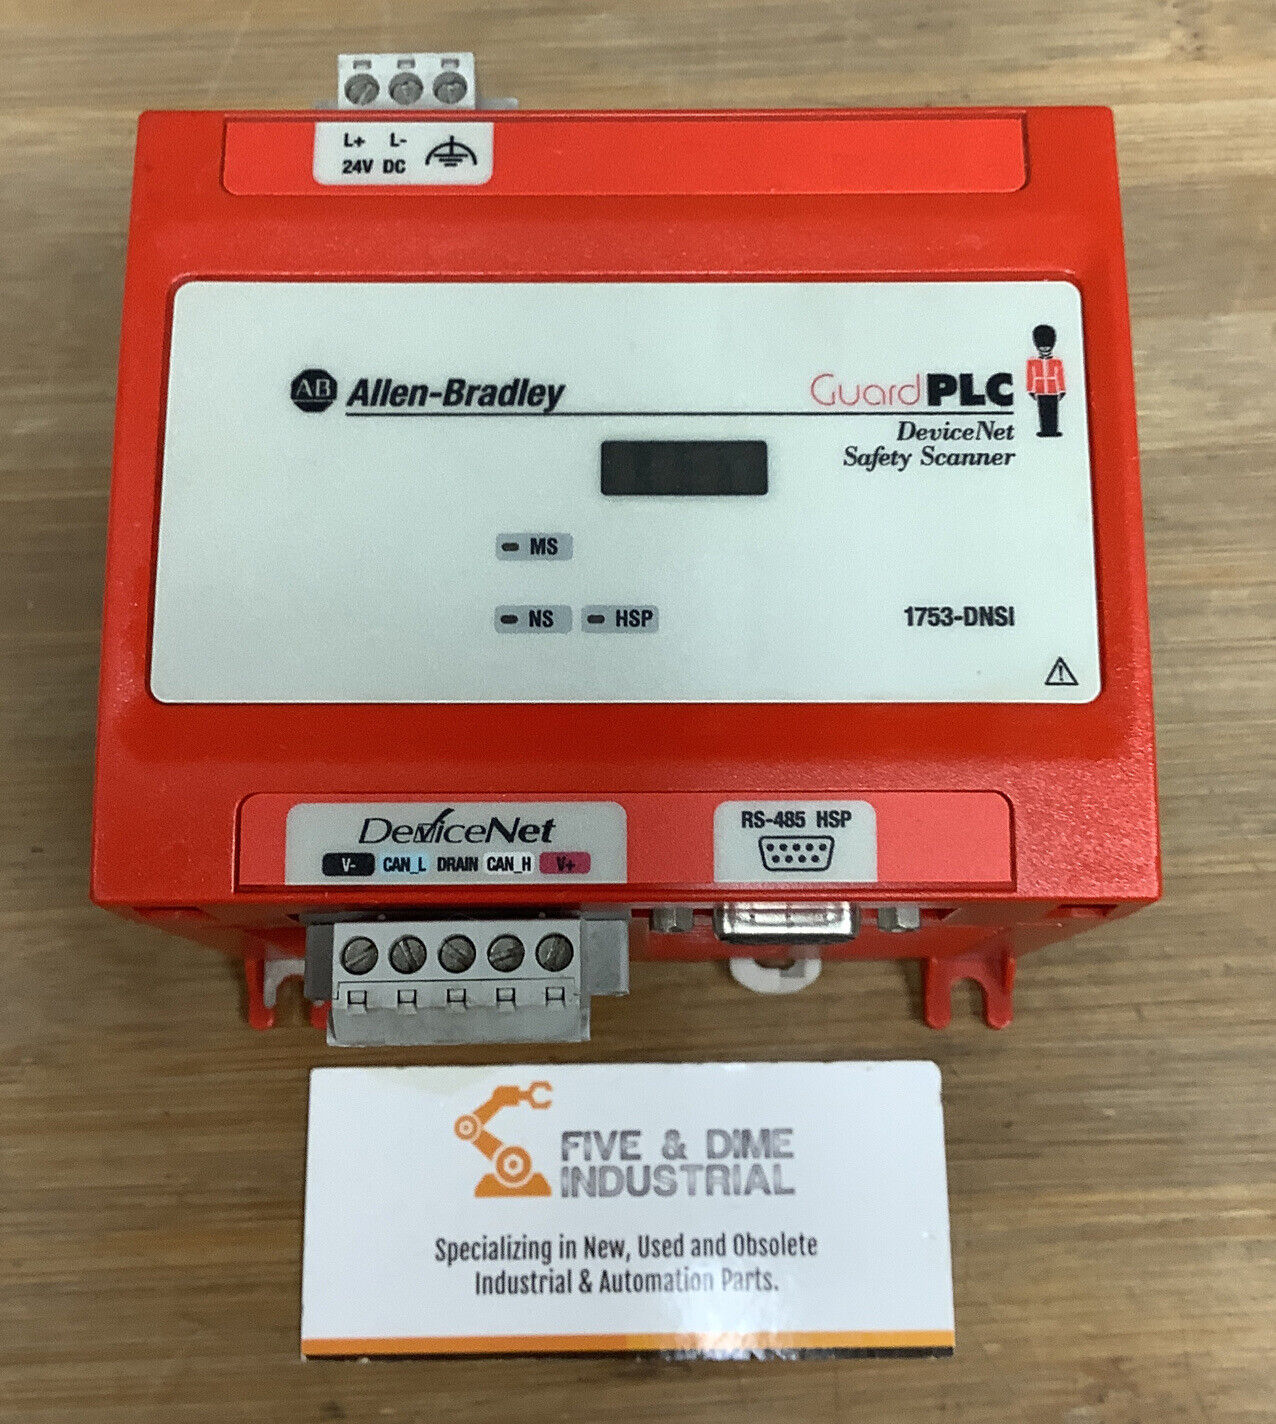 Allen Bradley 1753-dnsi Guardplc DeviceNet Safety Scanner f/w rev 1.002 (GR189)